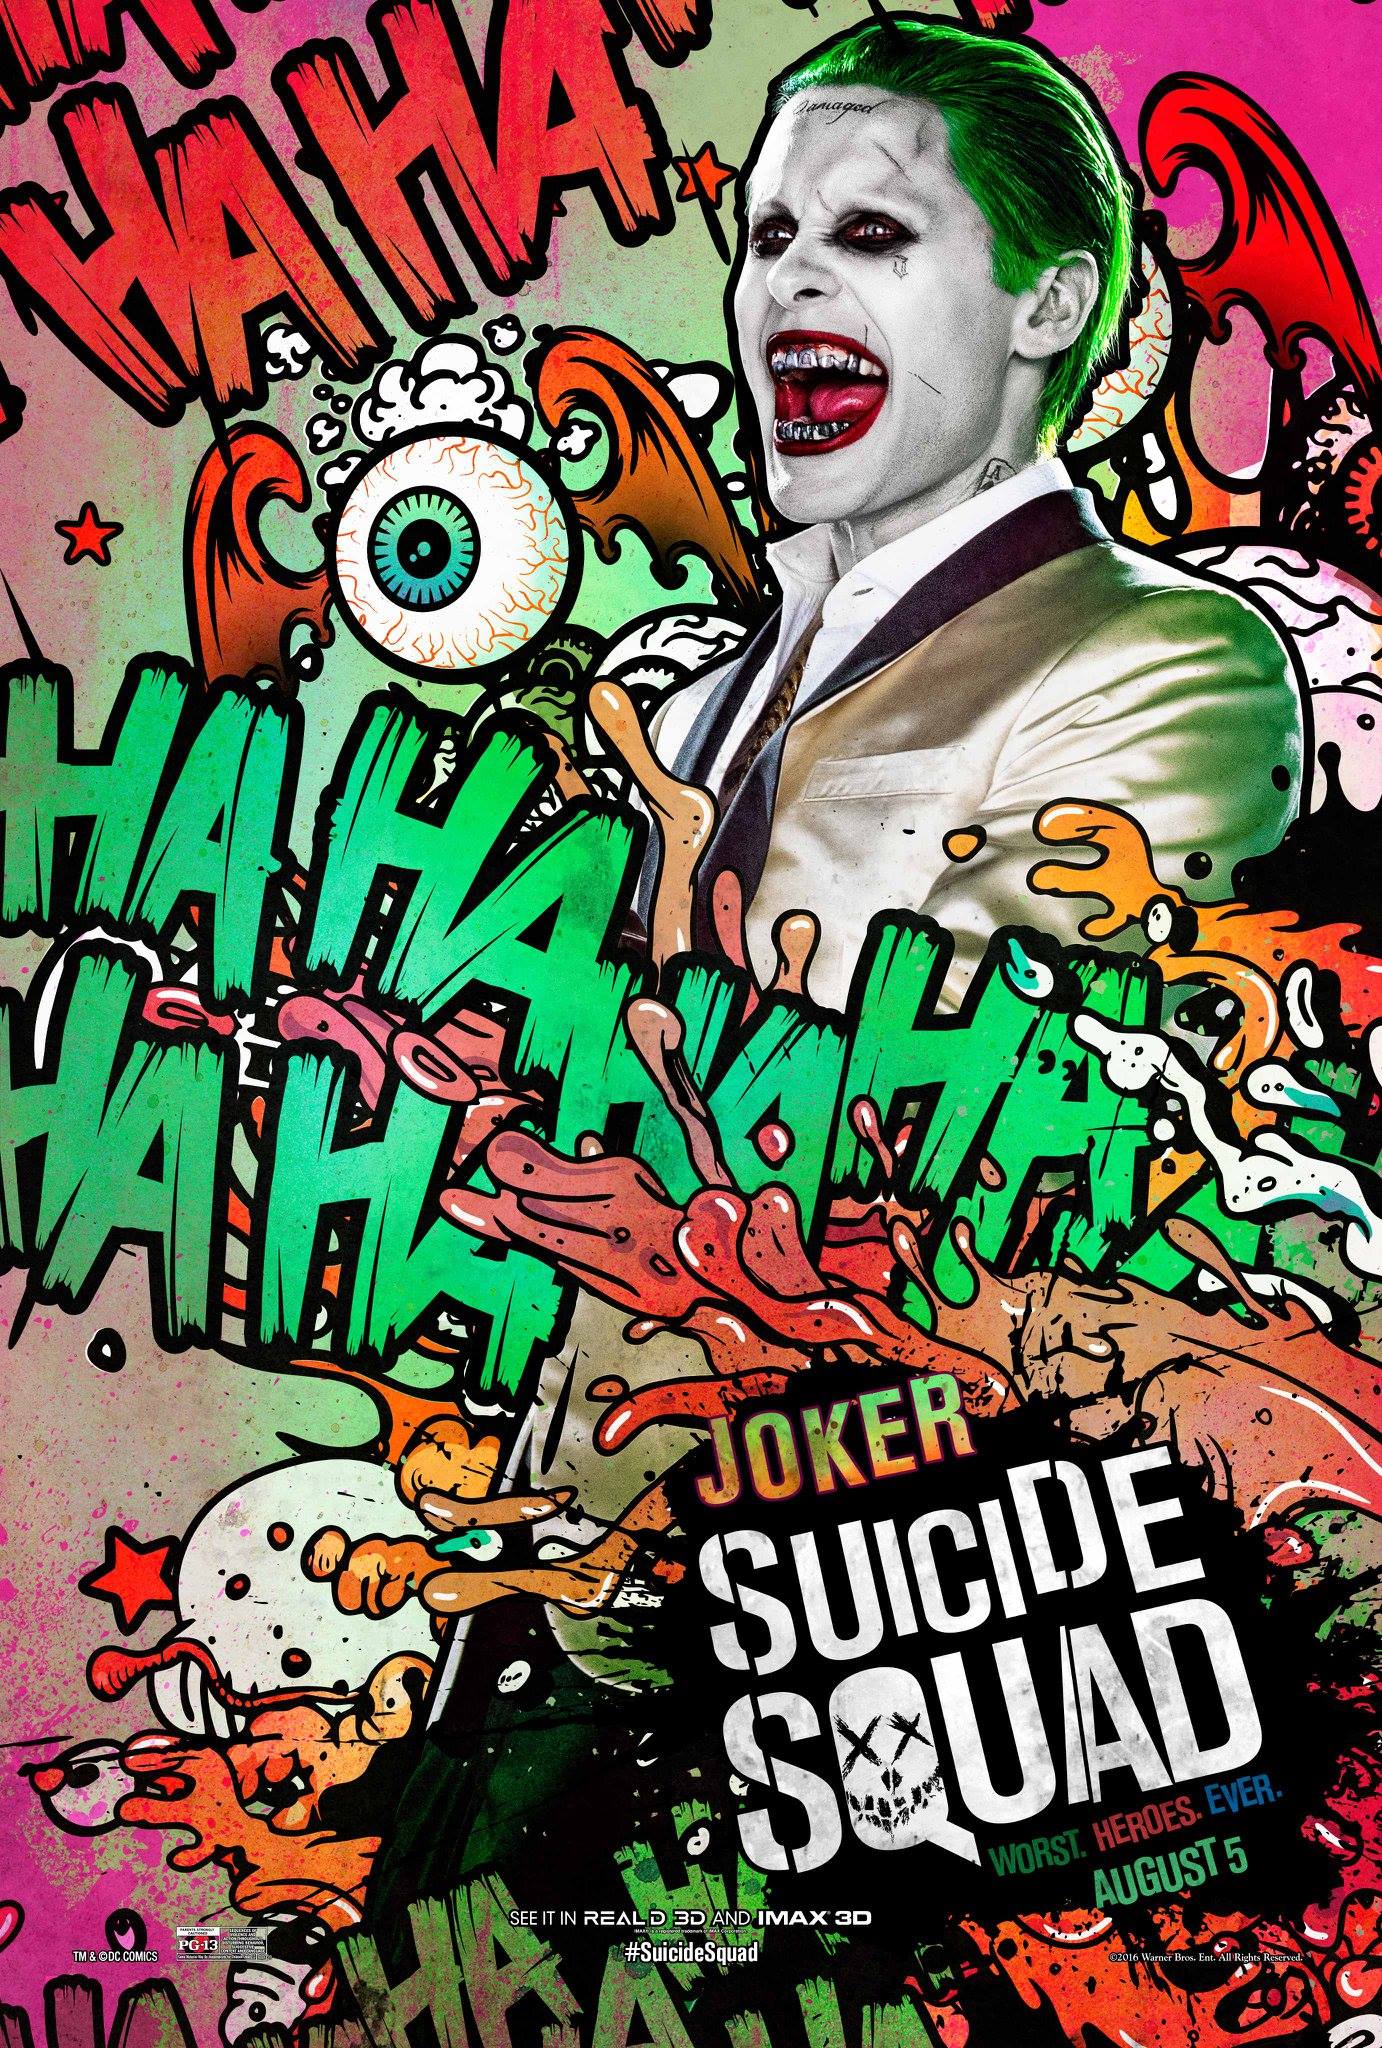 Joker Photos from Warner Bros.&Suicide Squad